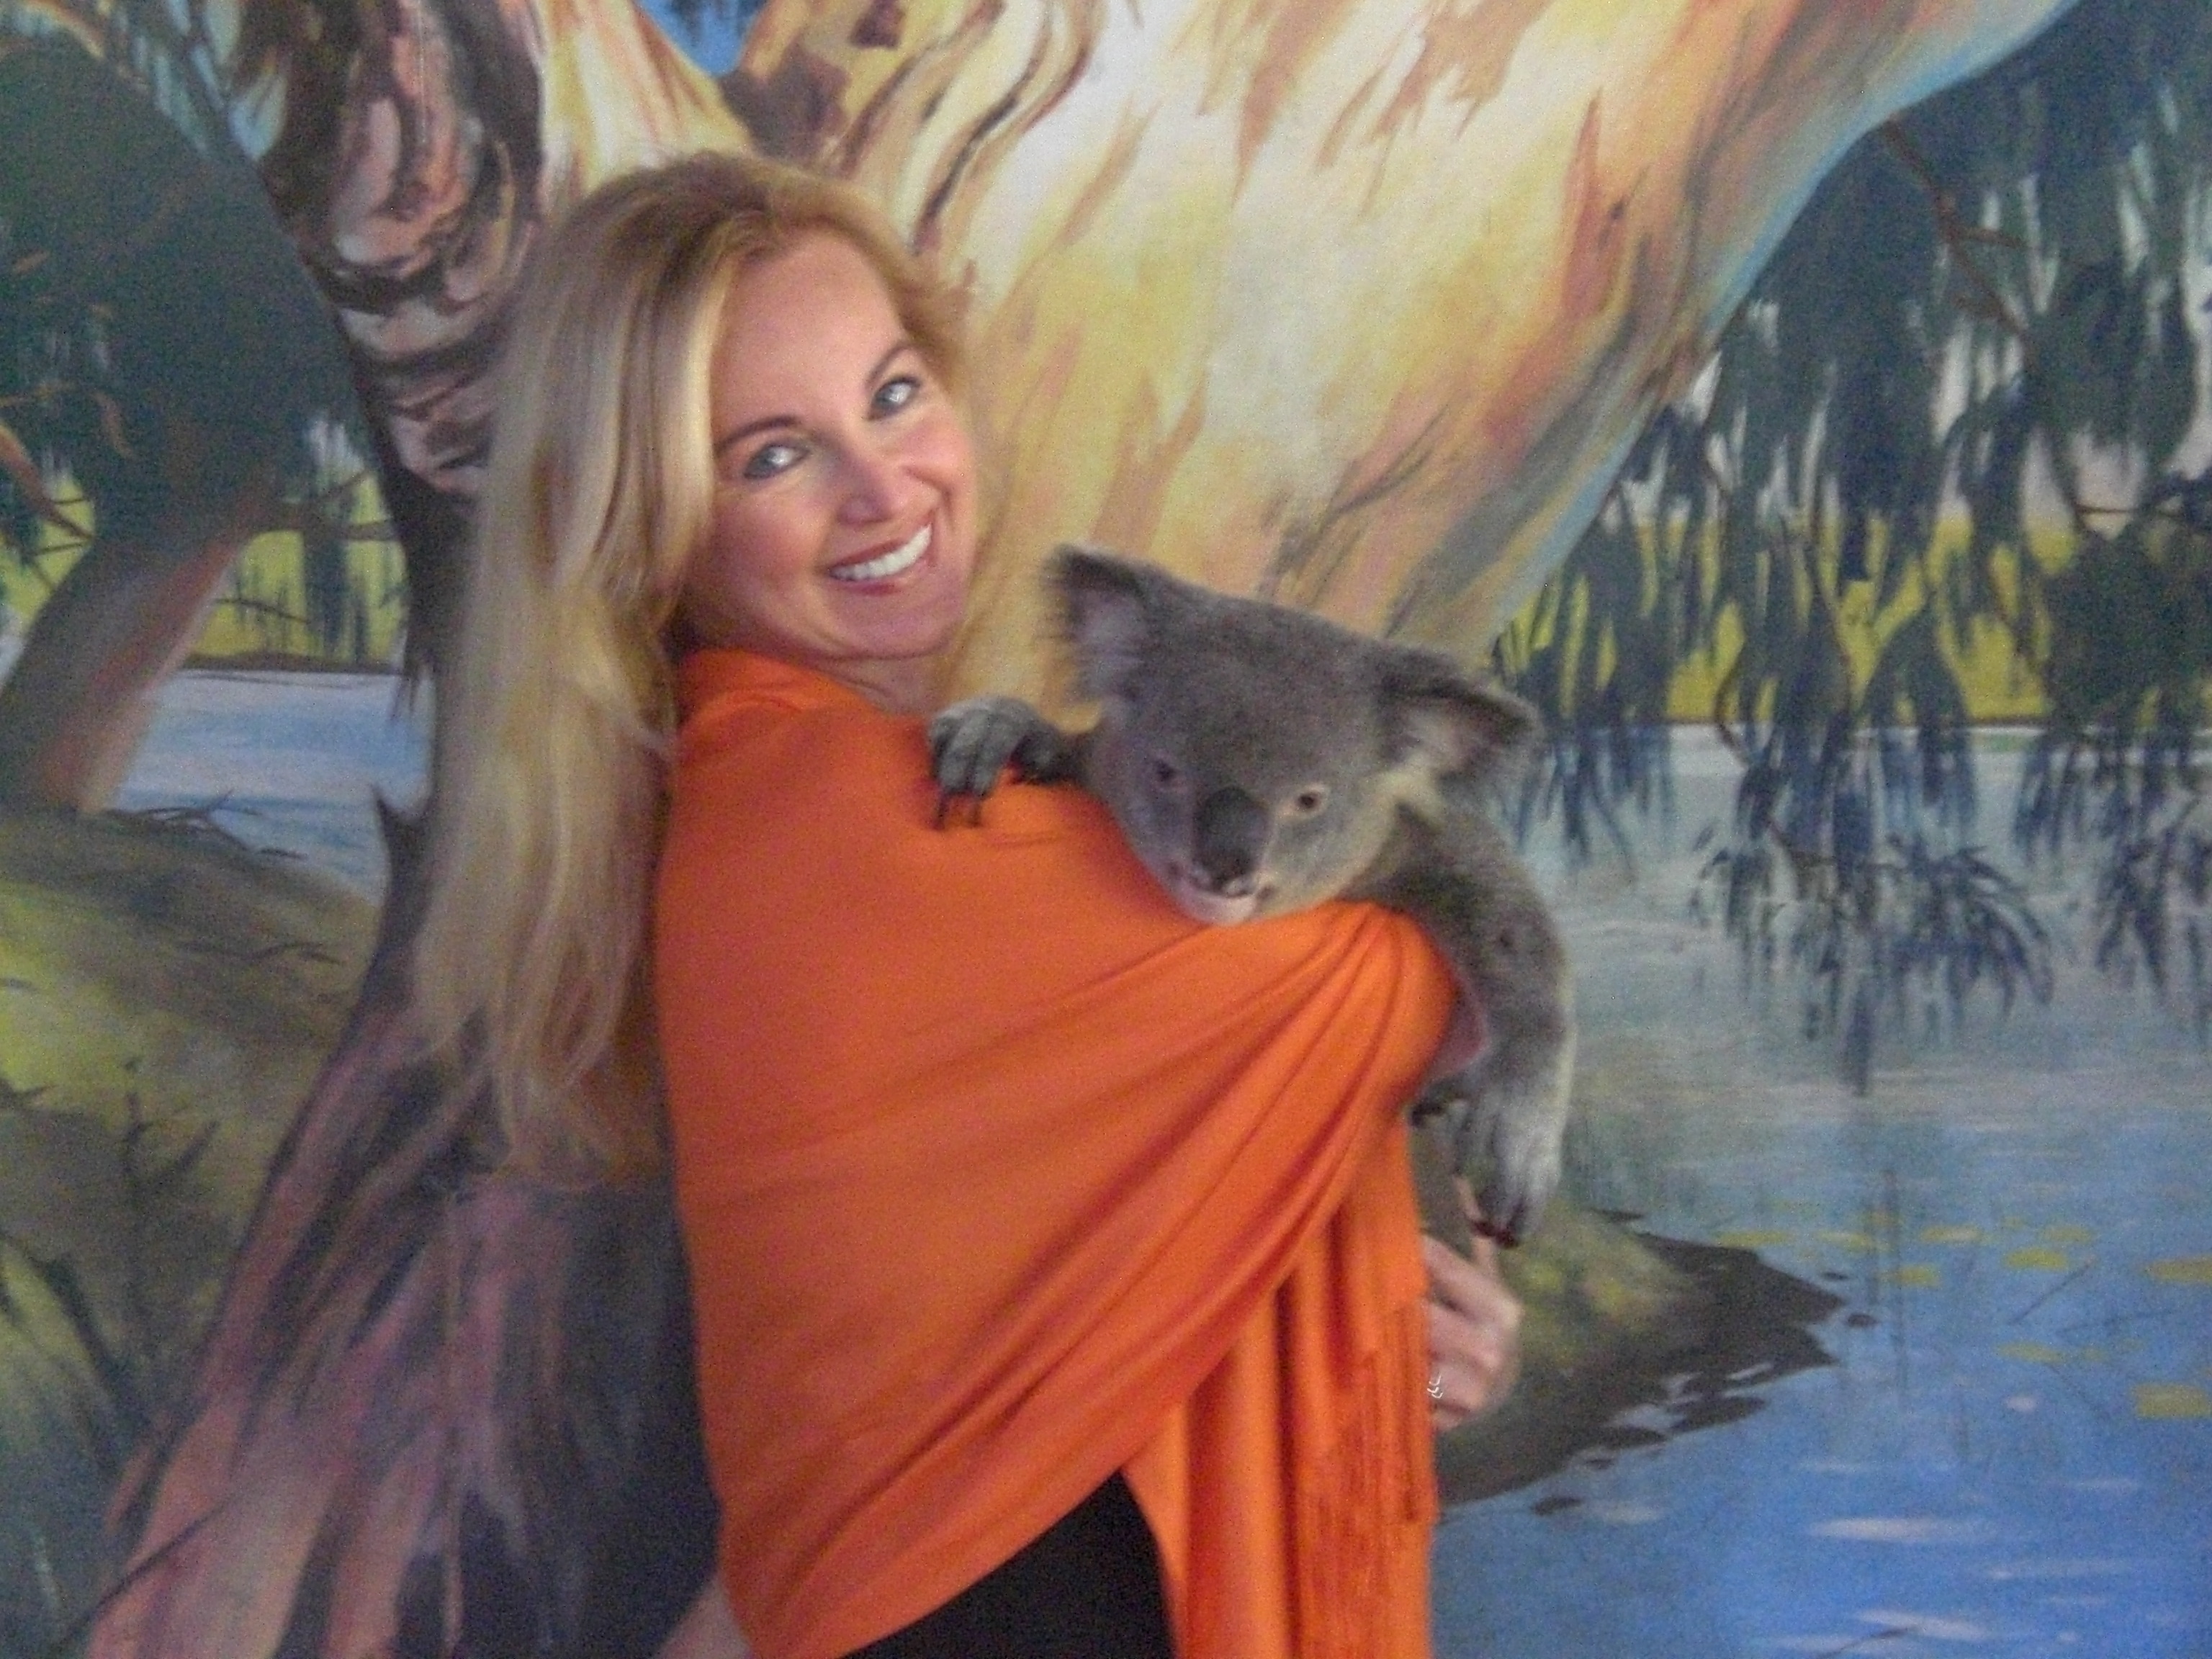 Beatrice de Borg at the Save the Koala fundraiser event in Australia